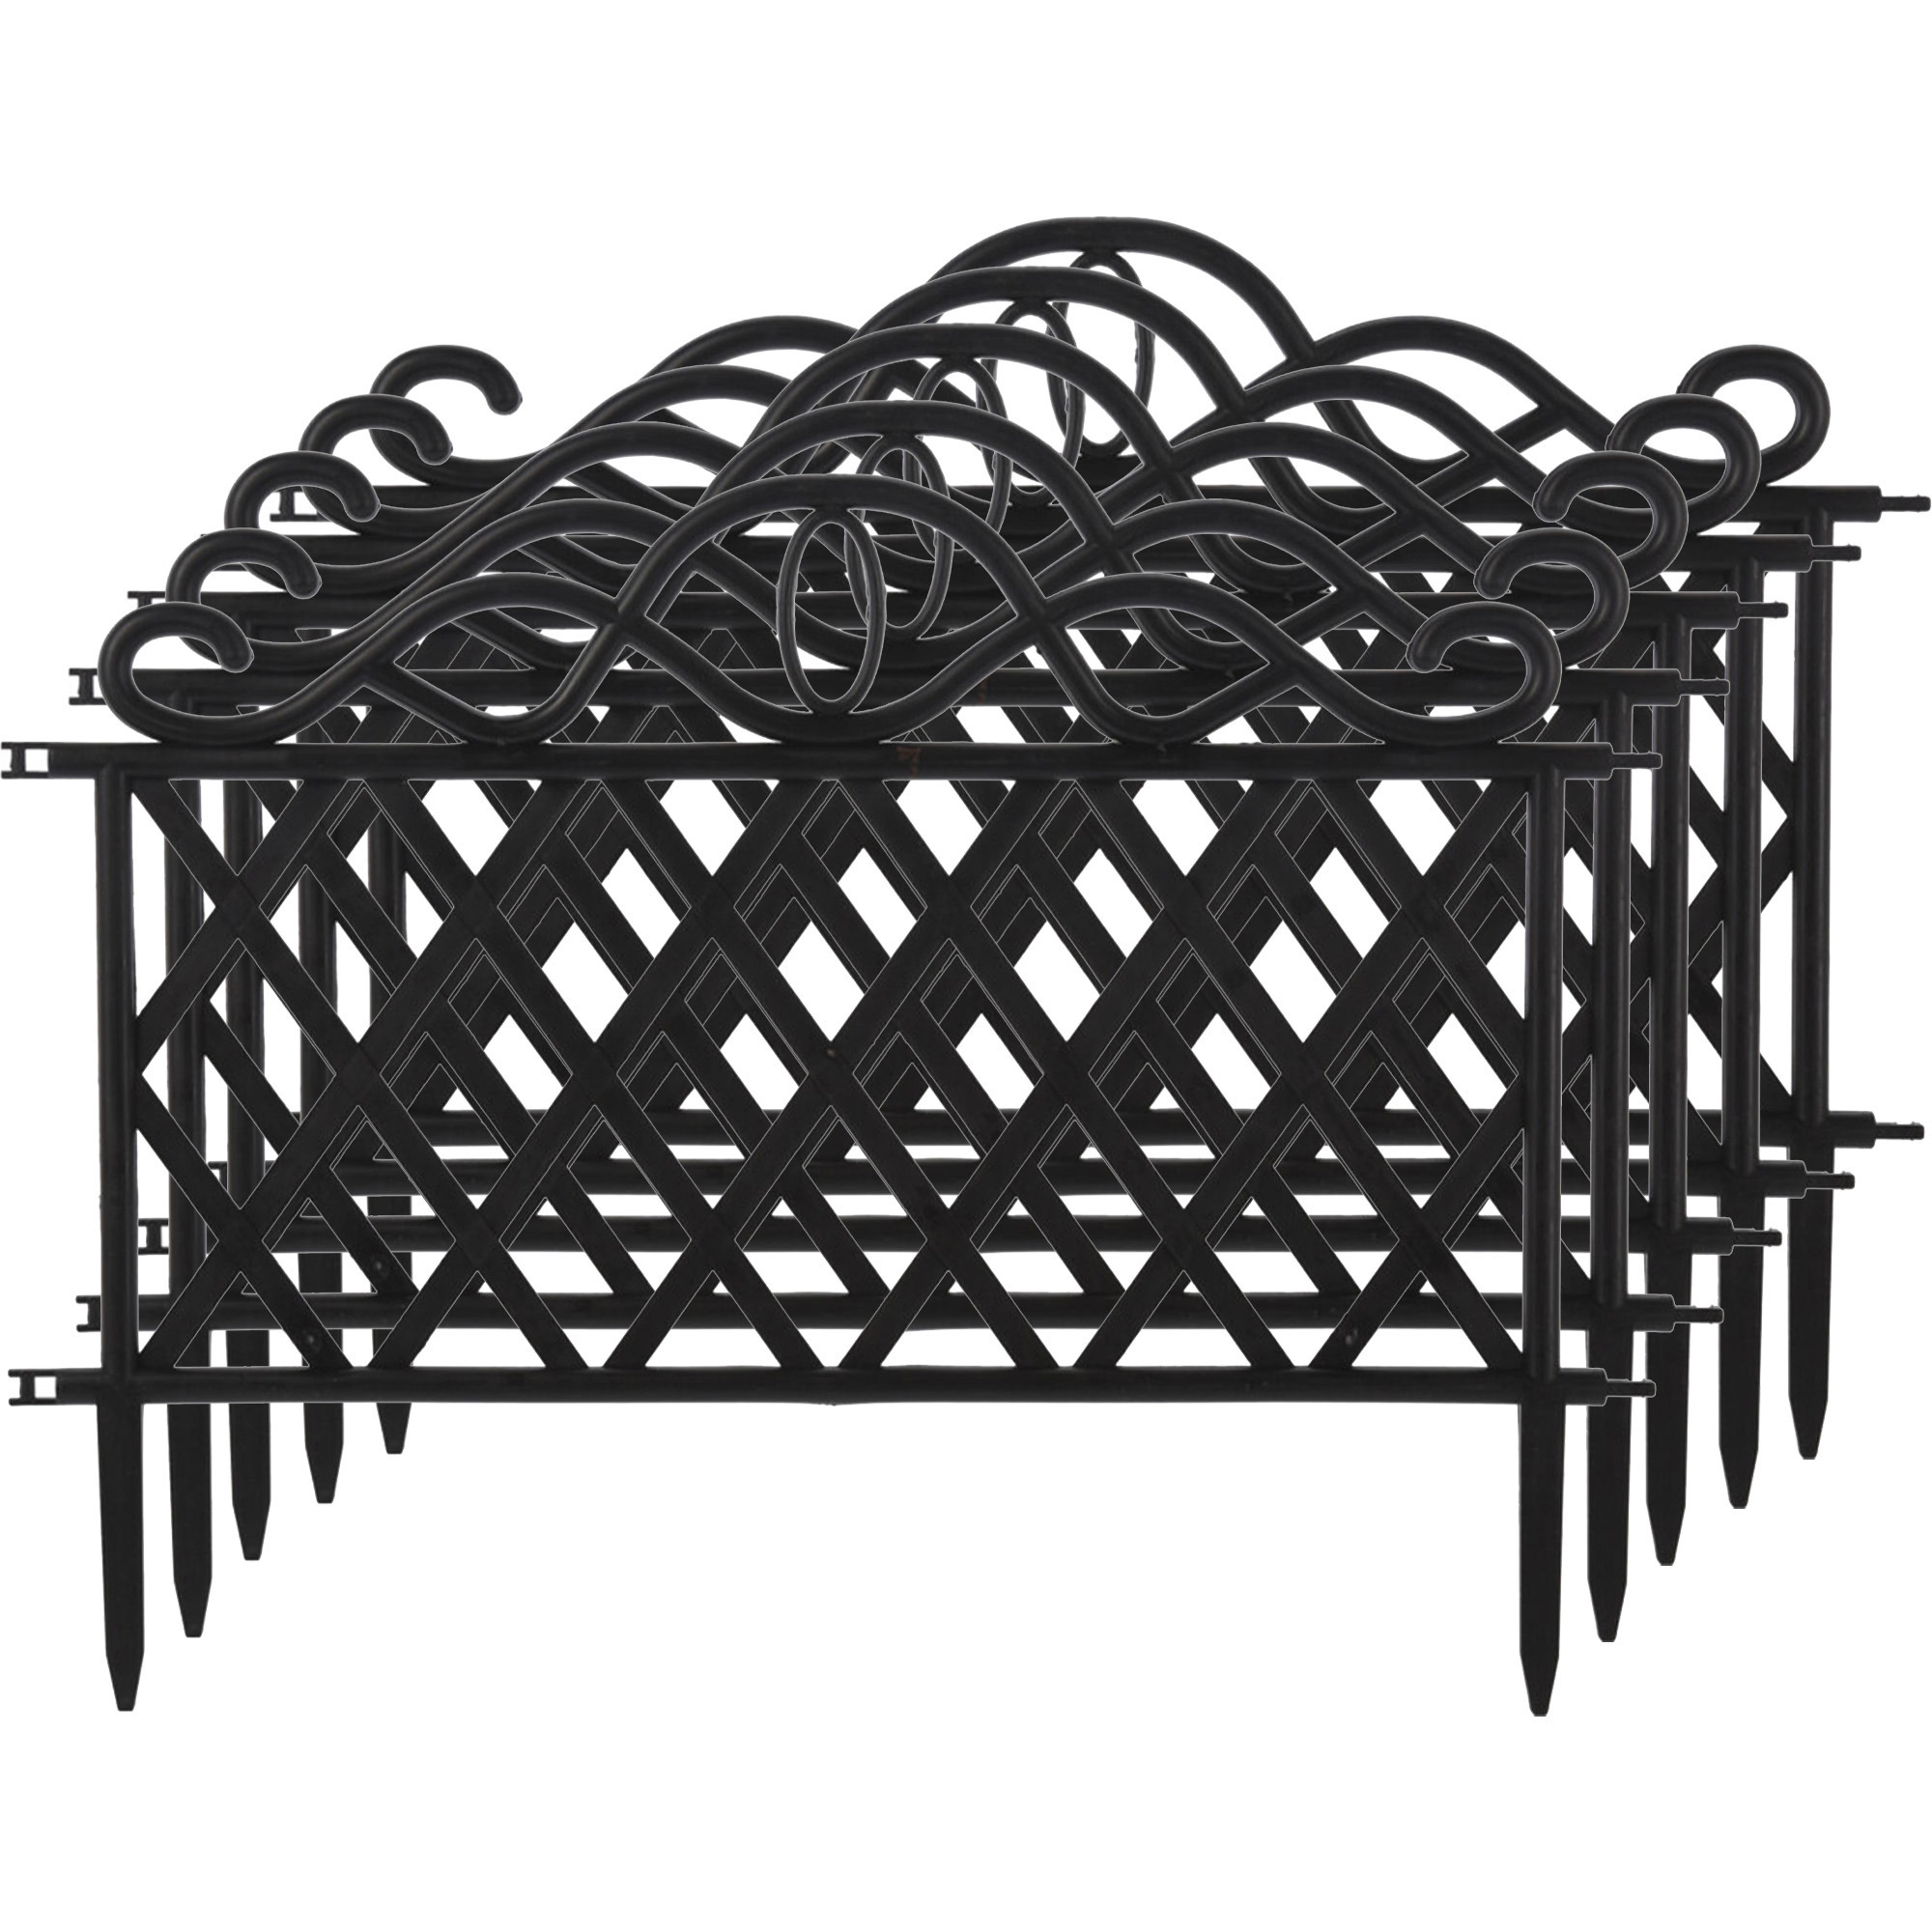 Tuinhekjes 15x stuks kunststof 48 x 34 cm zwart borderrand tuinafscheiding